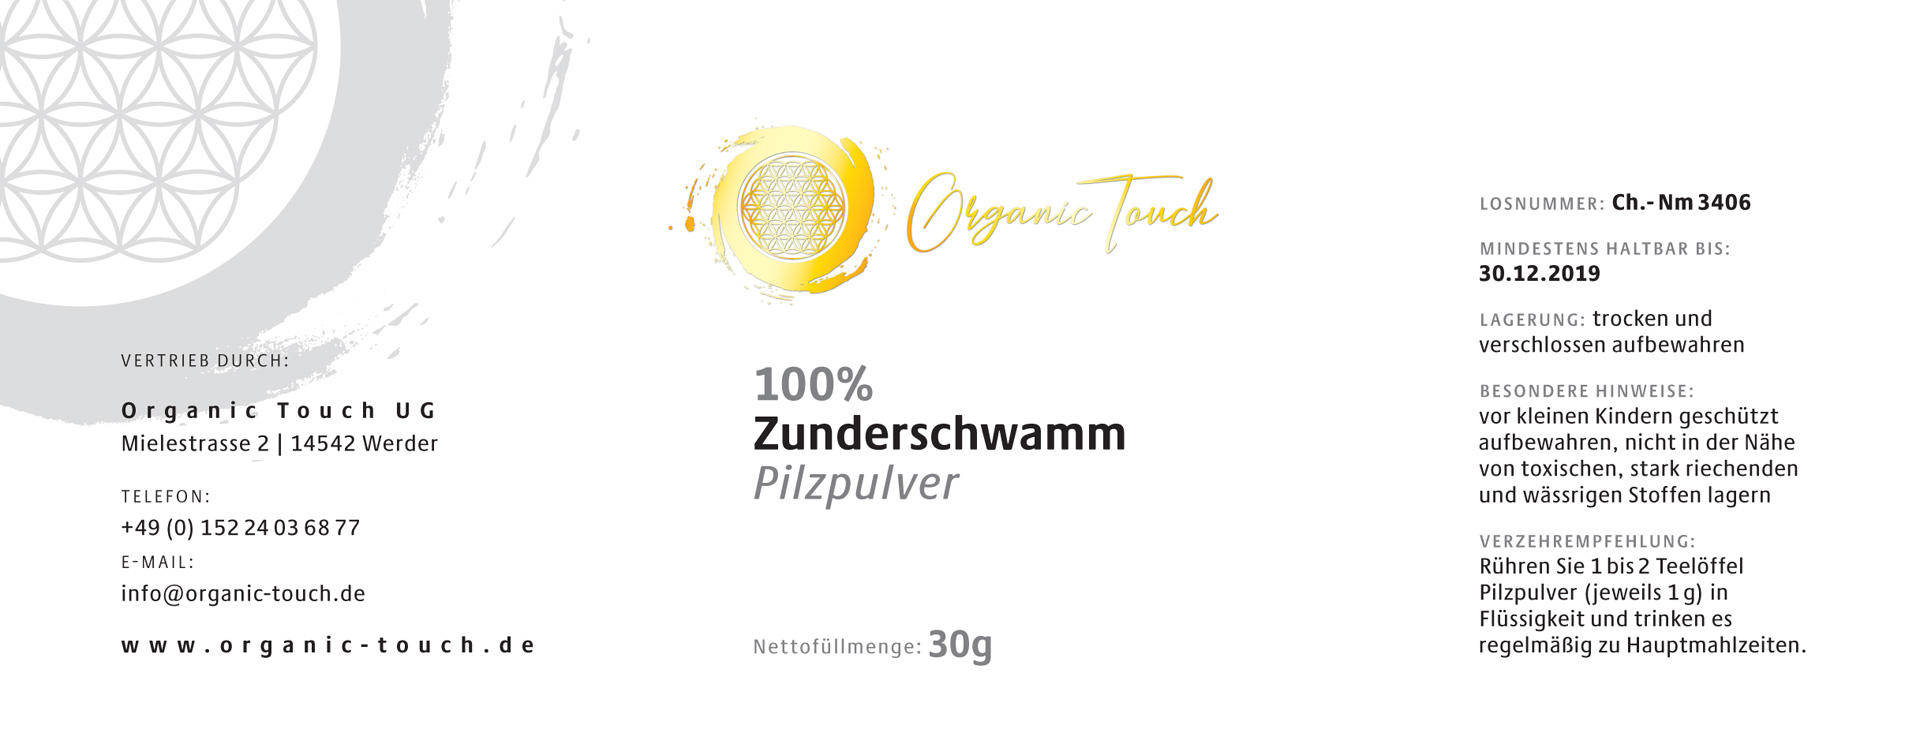 100% Zunderschwamm Pilzpulver - Organic Touch